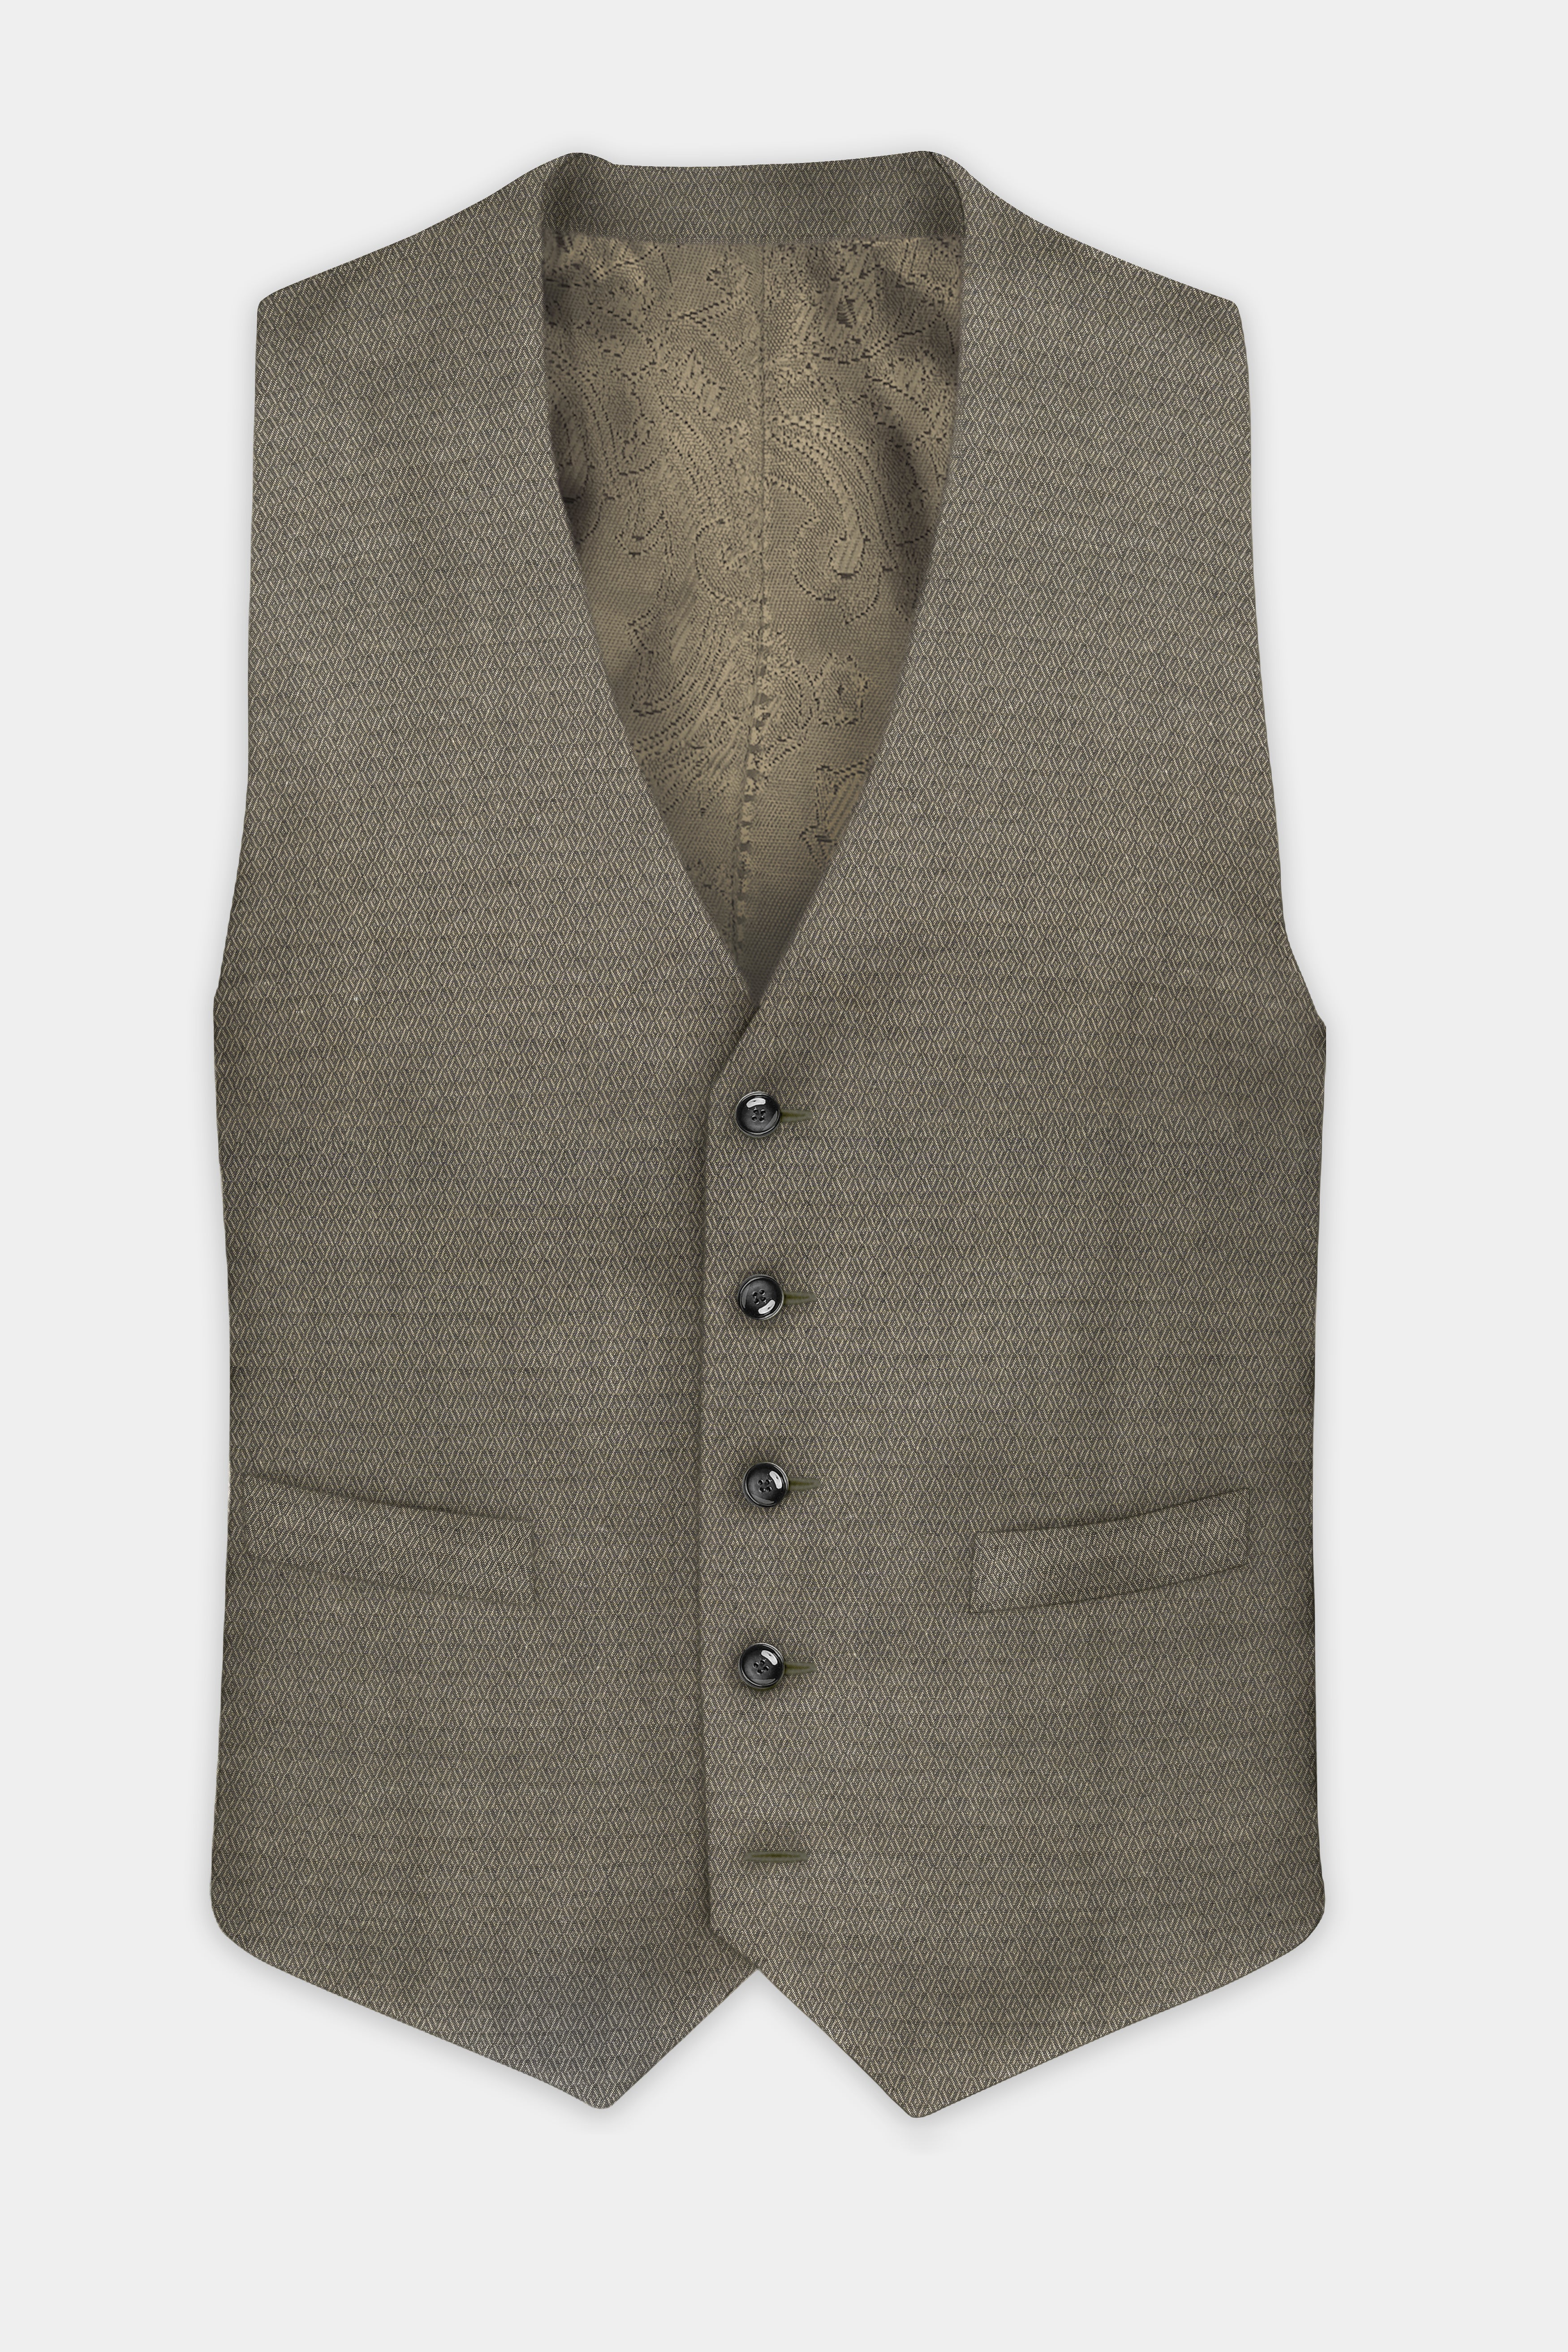 Wenge Brown Dobby Textured wool blend Waistcoat